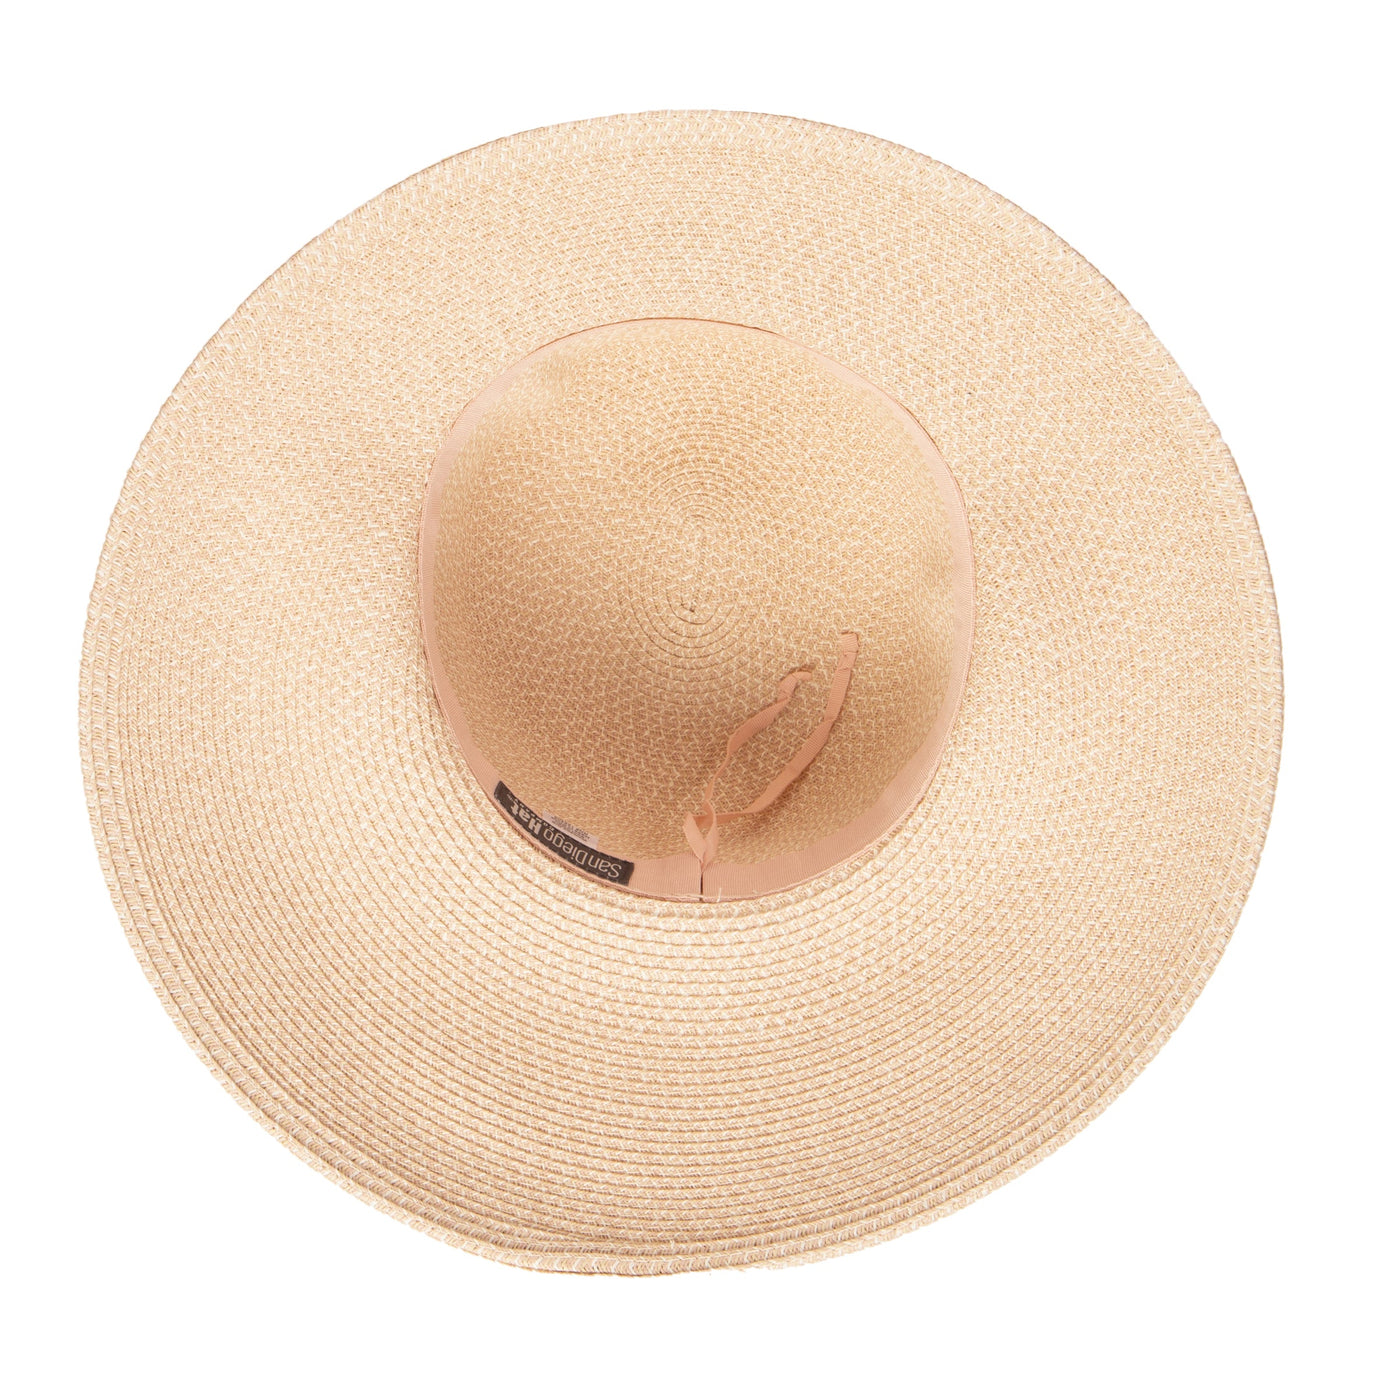 SUN BRIM - Daylight Asymmetrical Women's Sun Hat